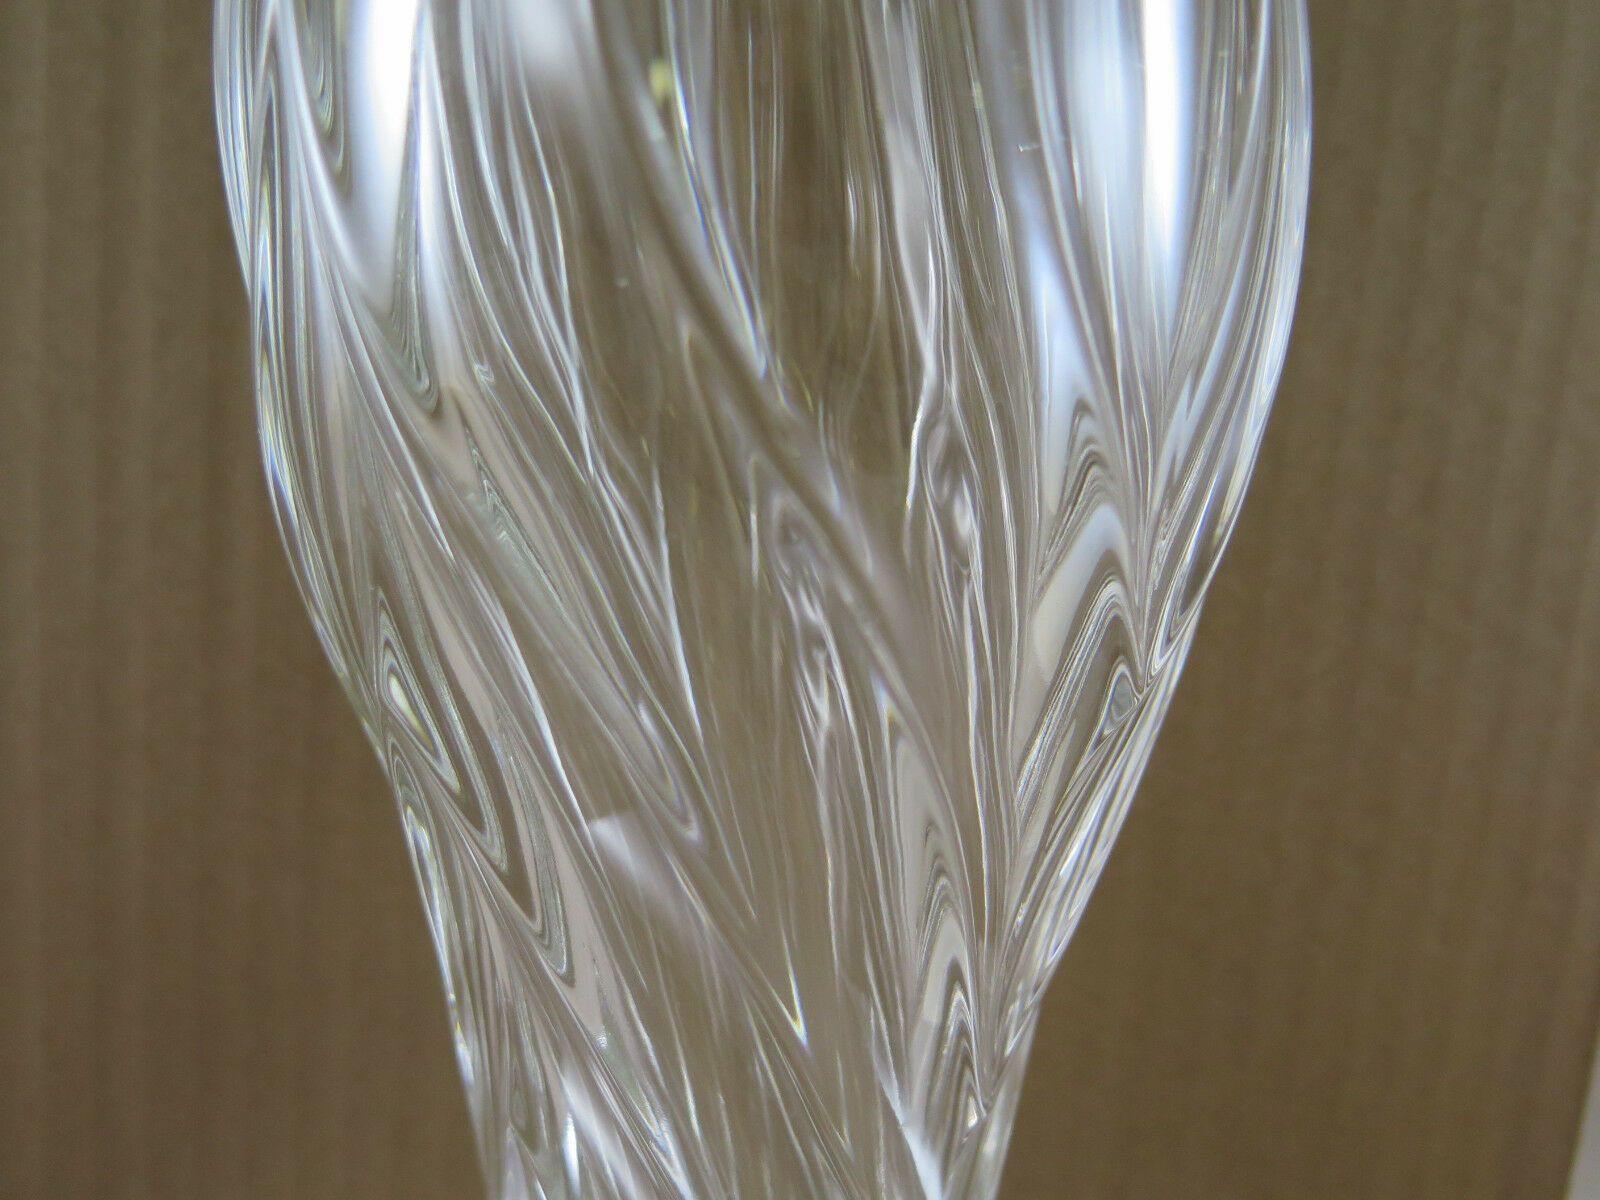 VASO IN VETRO DESIGN VINTAGE Josef Inwald glassworks DESIGN Rudolf Schrot R24 - Belbello Antiques